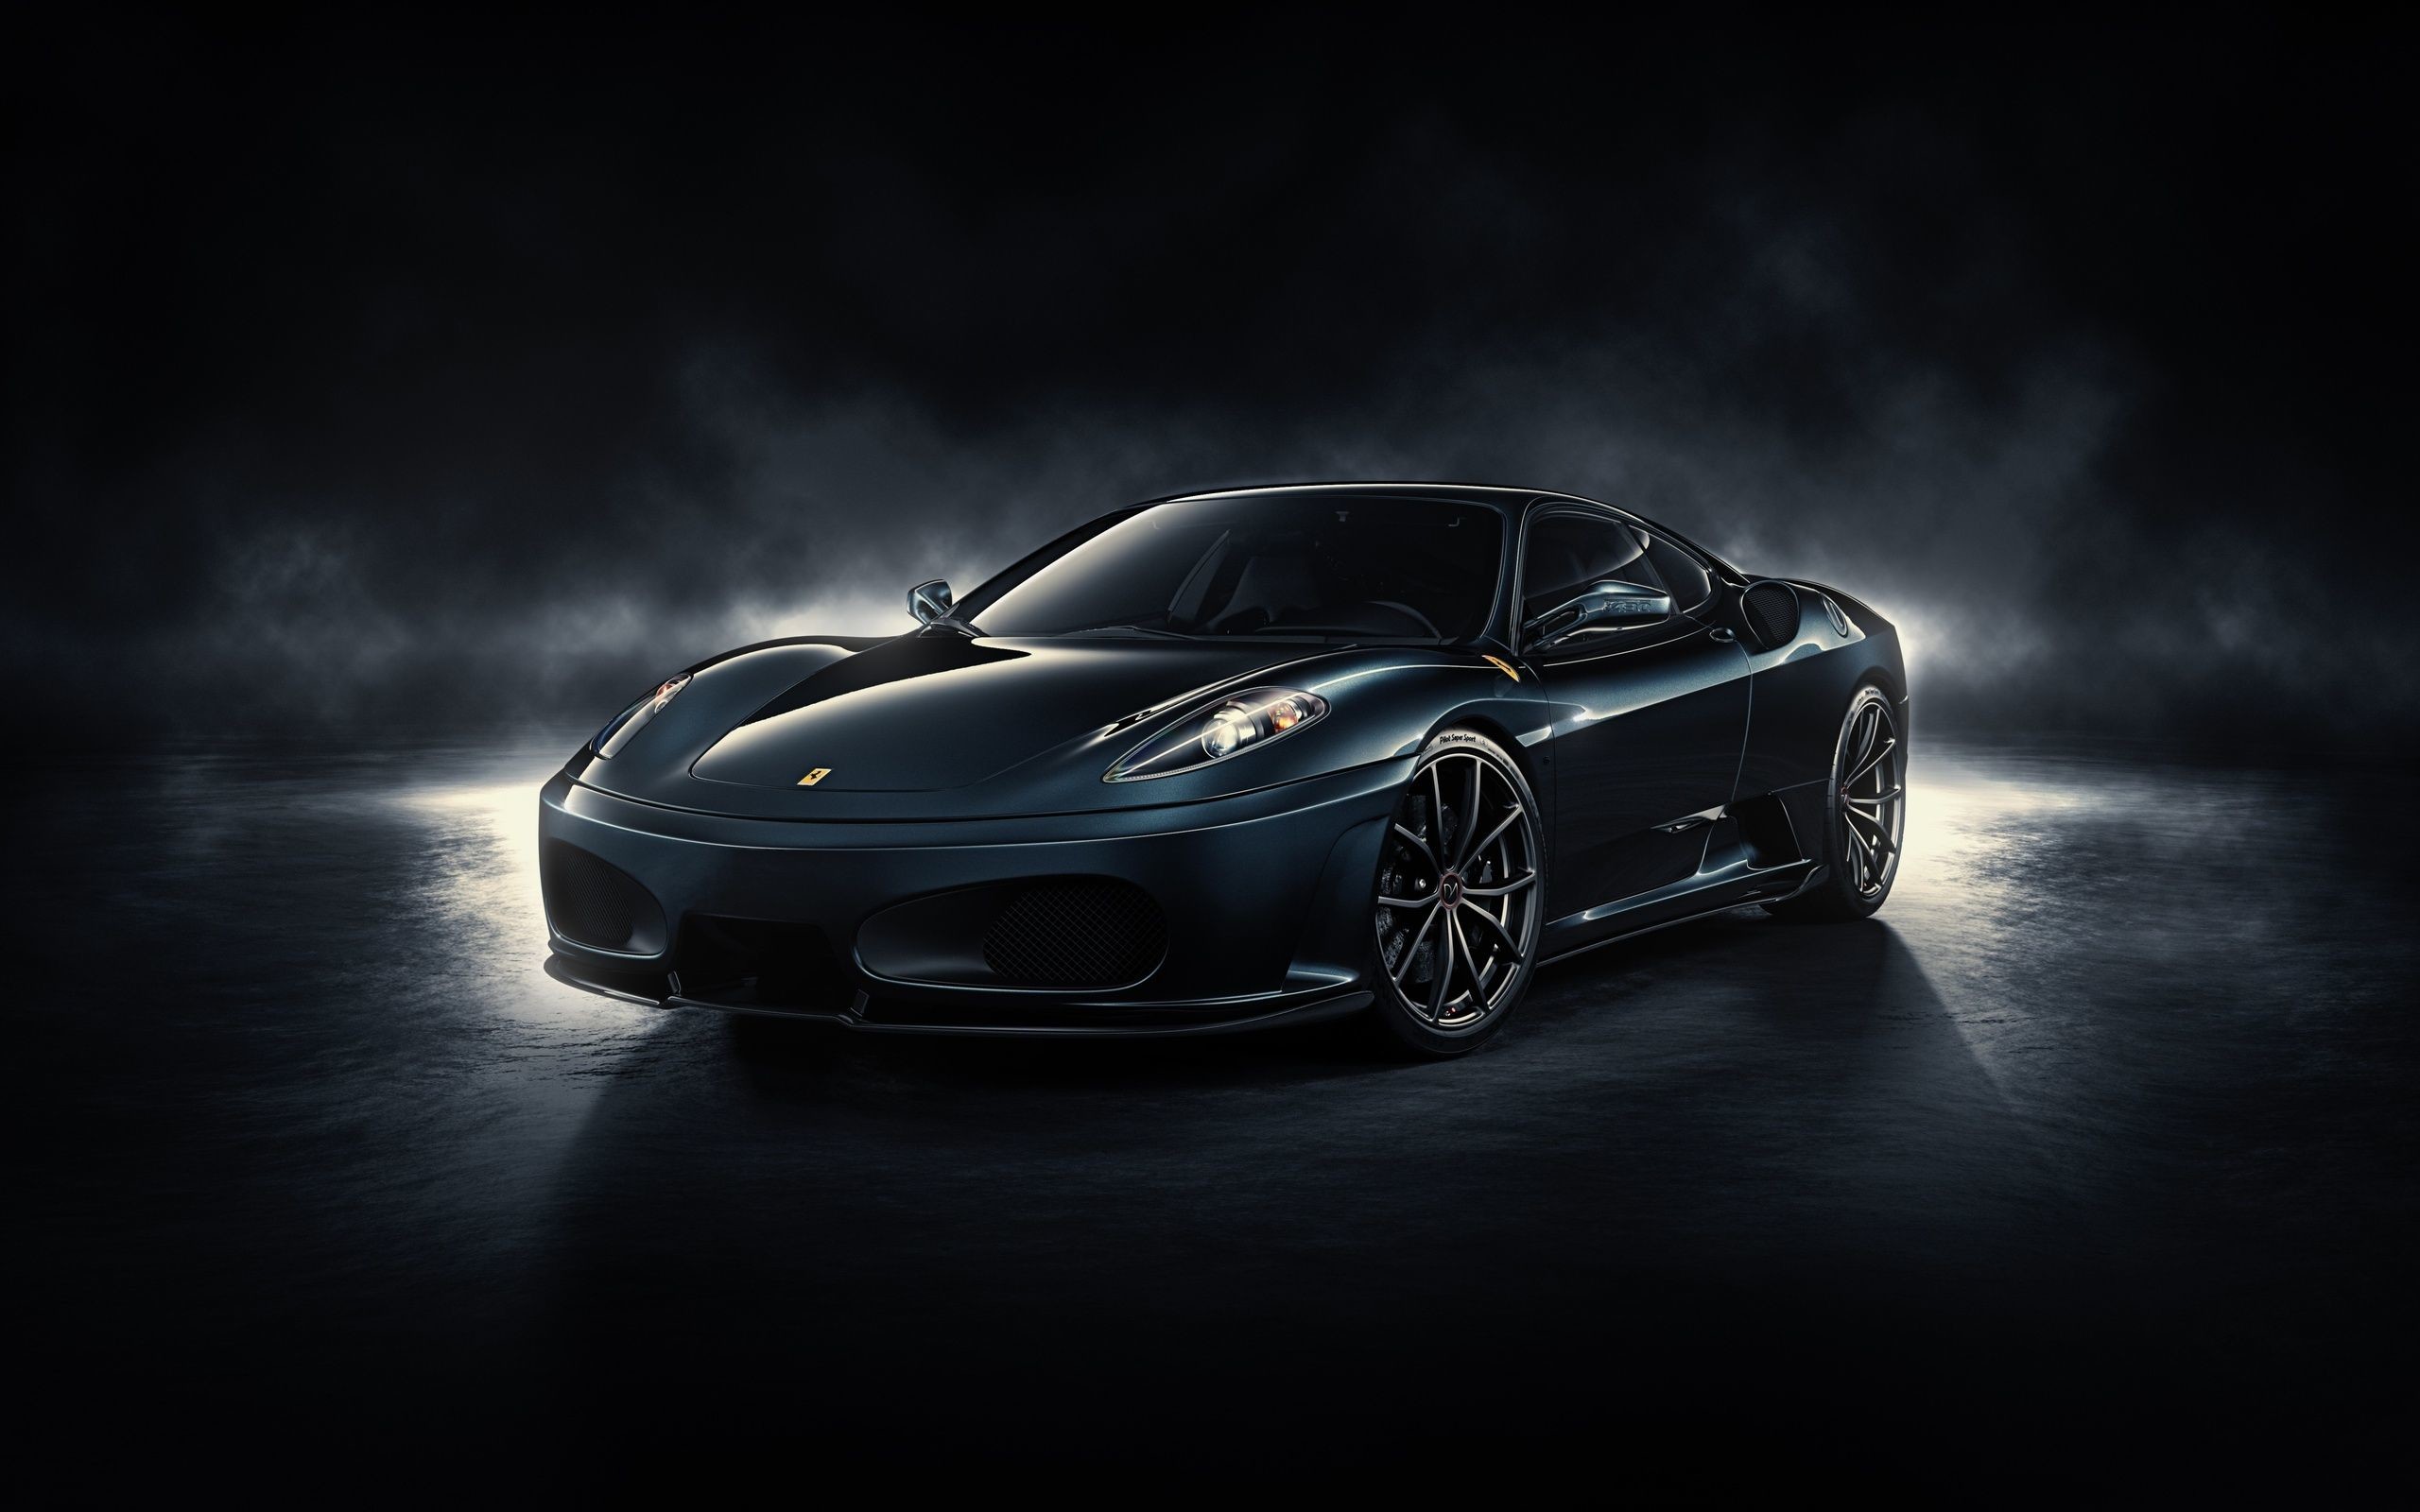 2560x1600 Cool Car wallpaper with Black Ferrari in dark Background